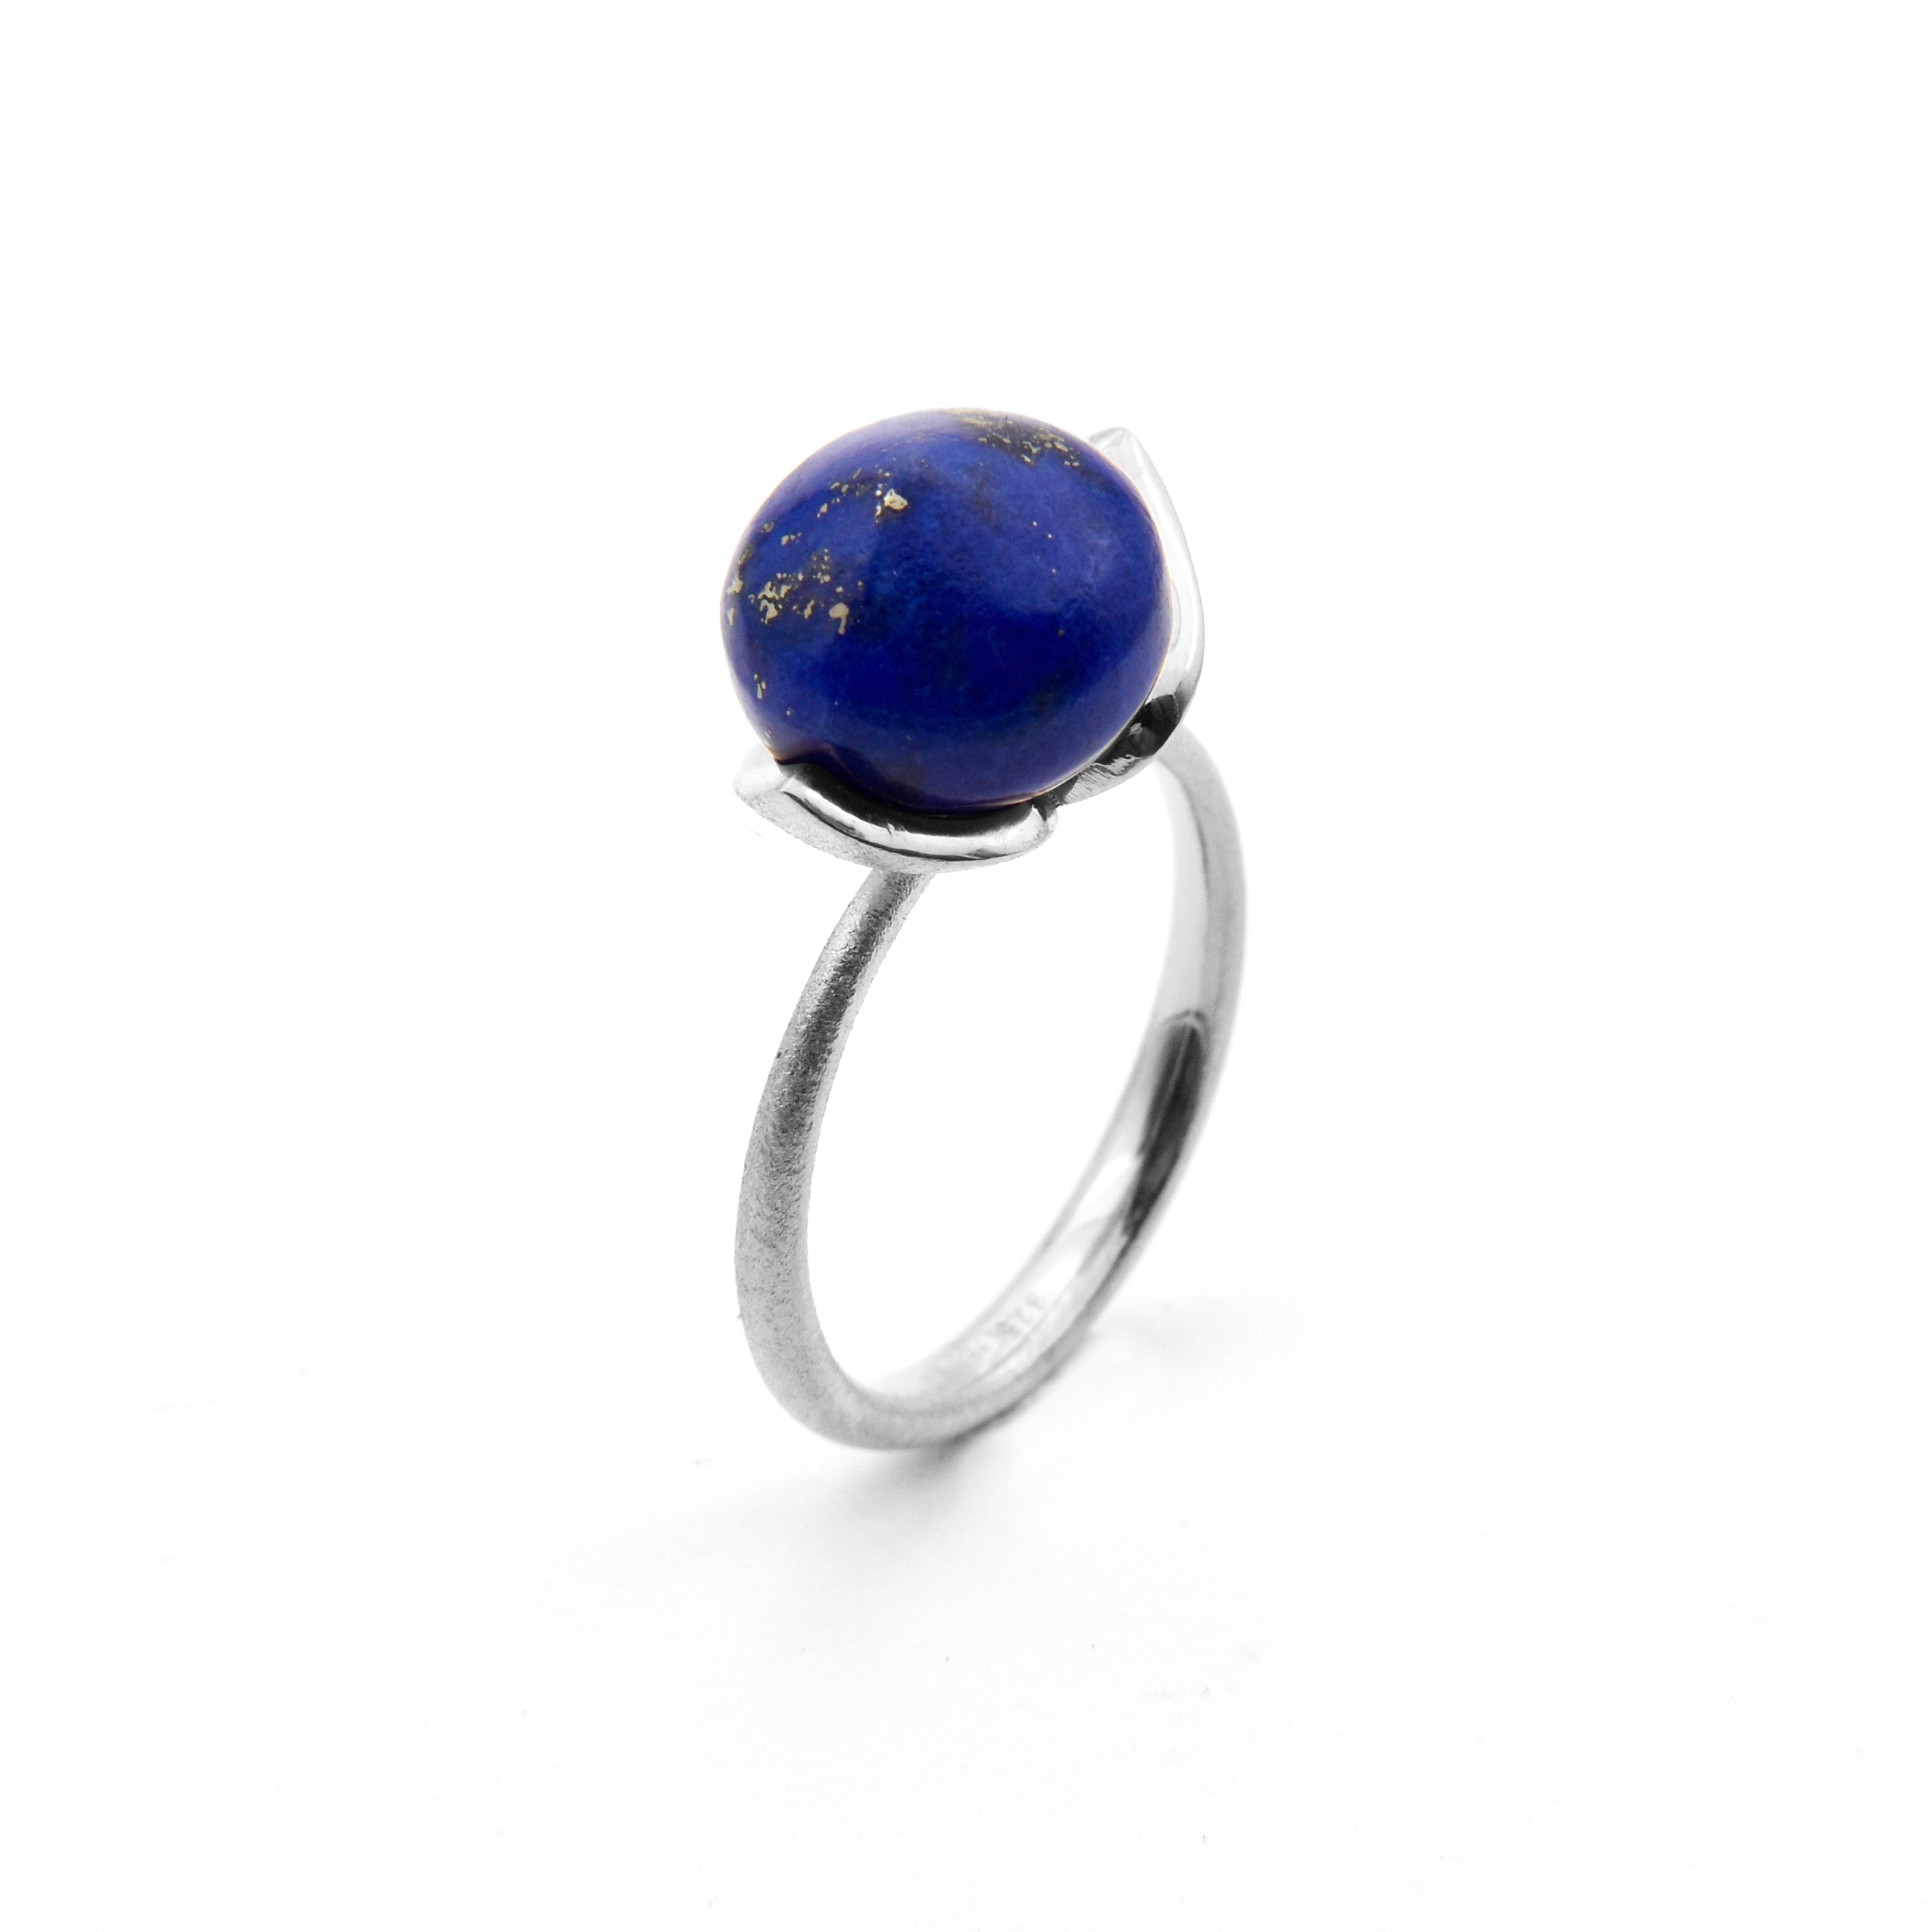 Dolce ring "medium" with lapis lazuli 925/-